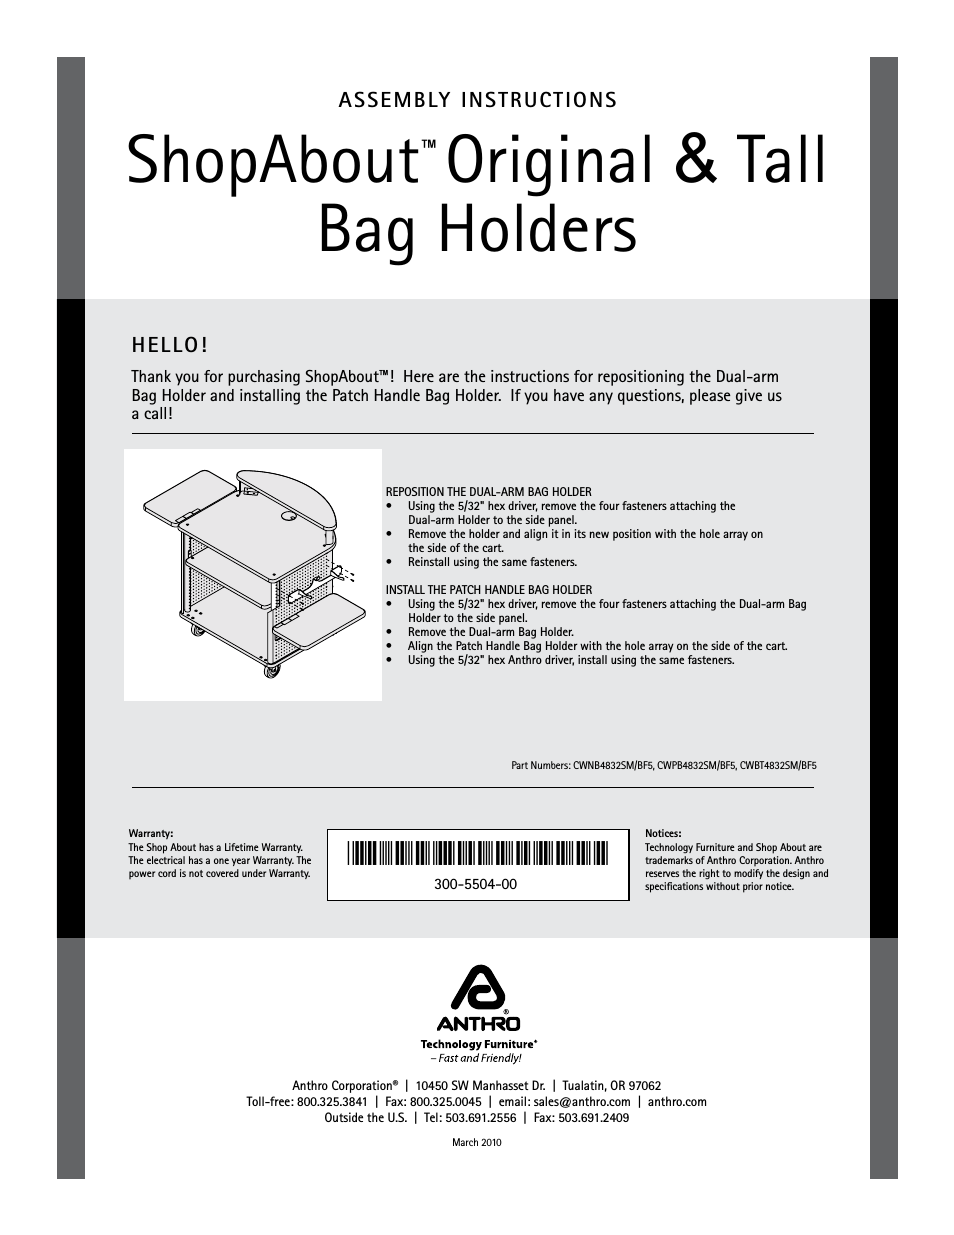 ShopAbout Original Assembly Instructions